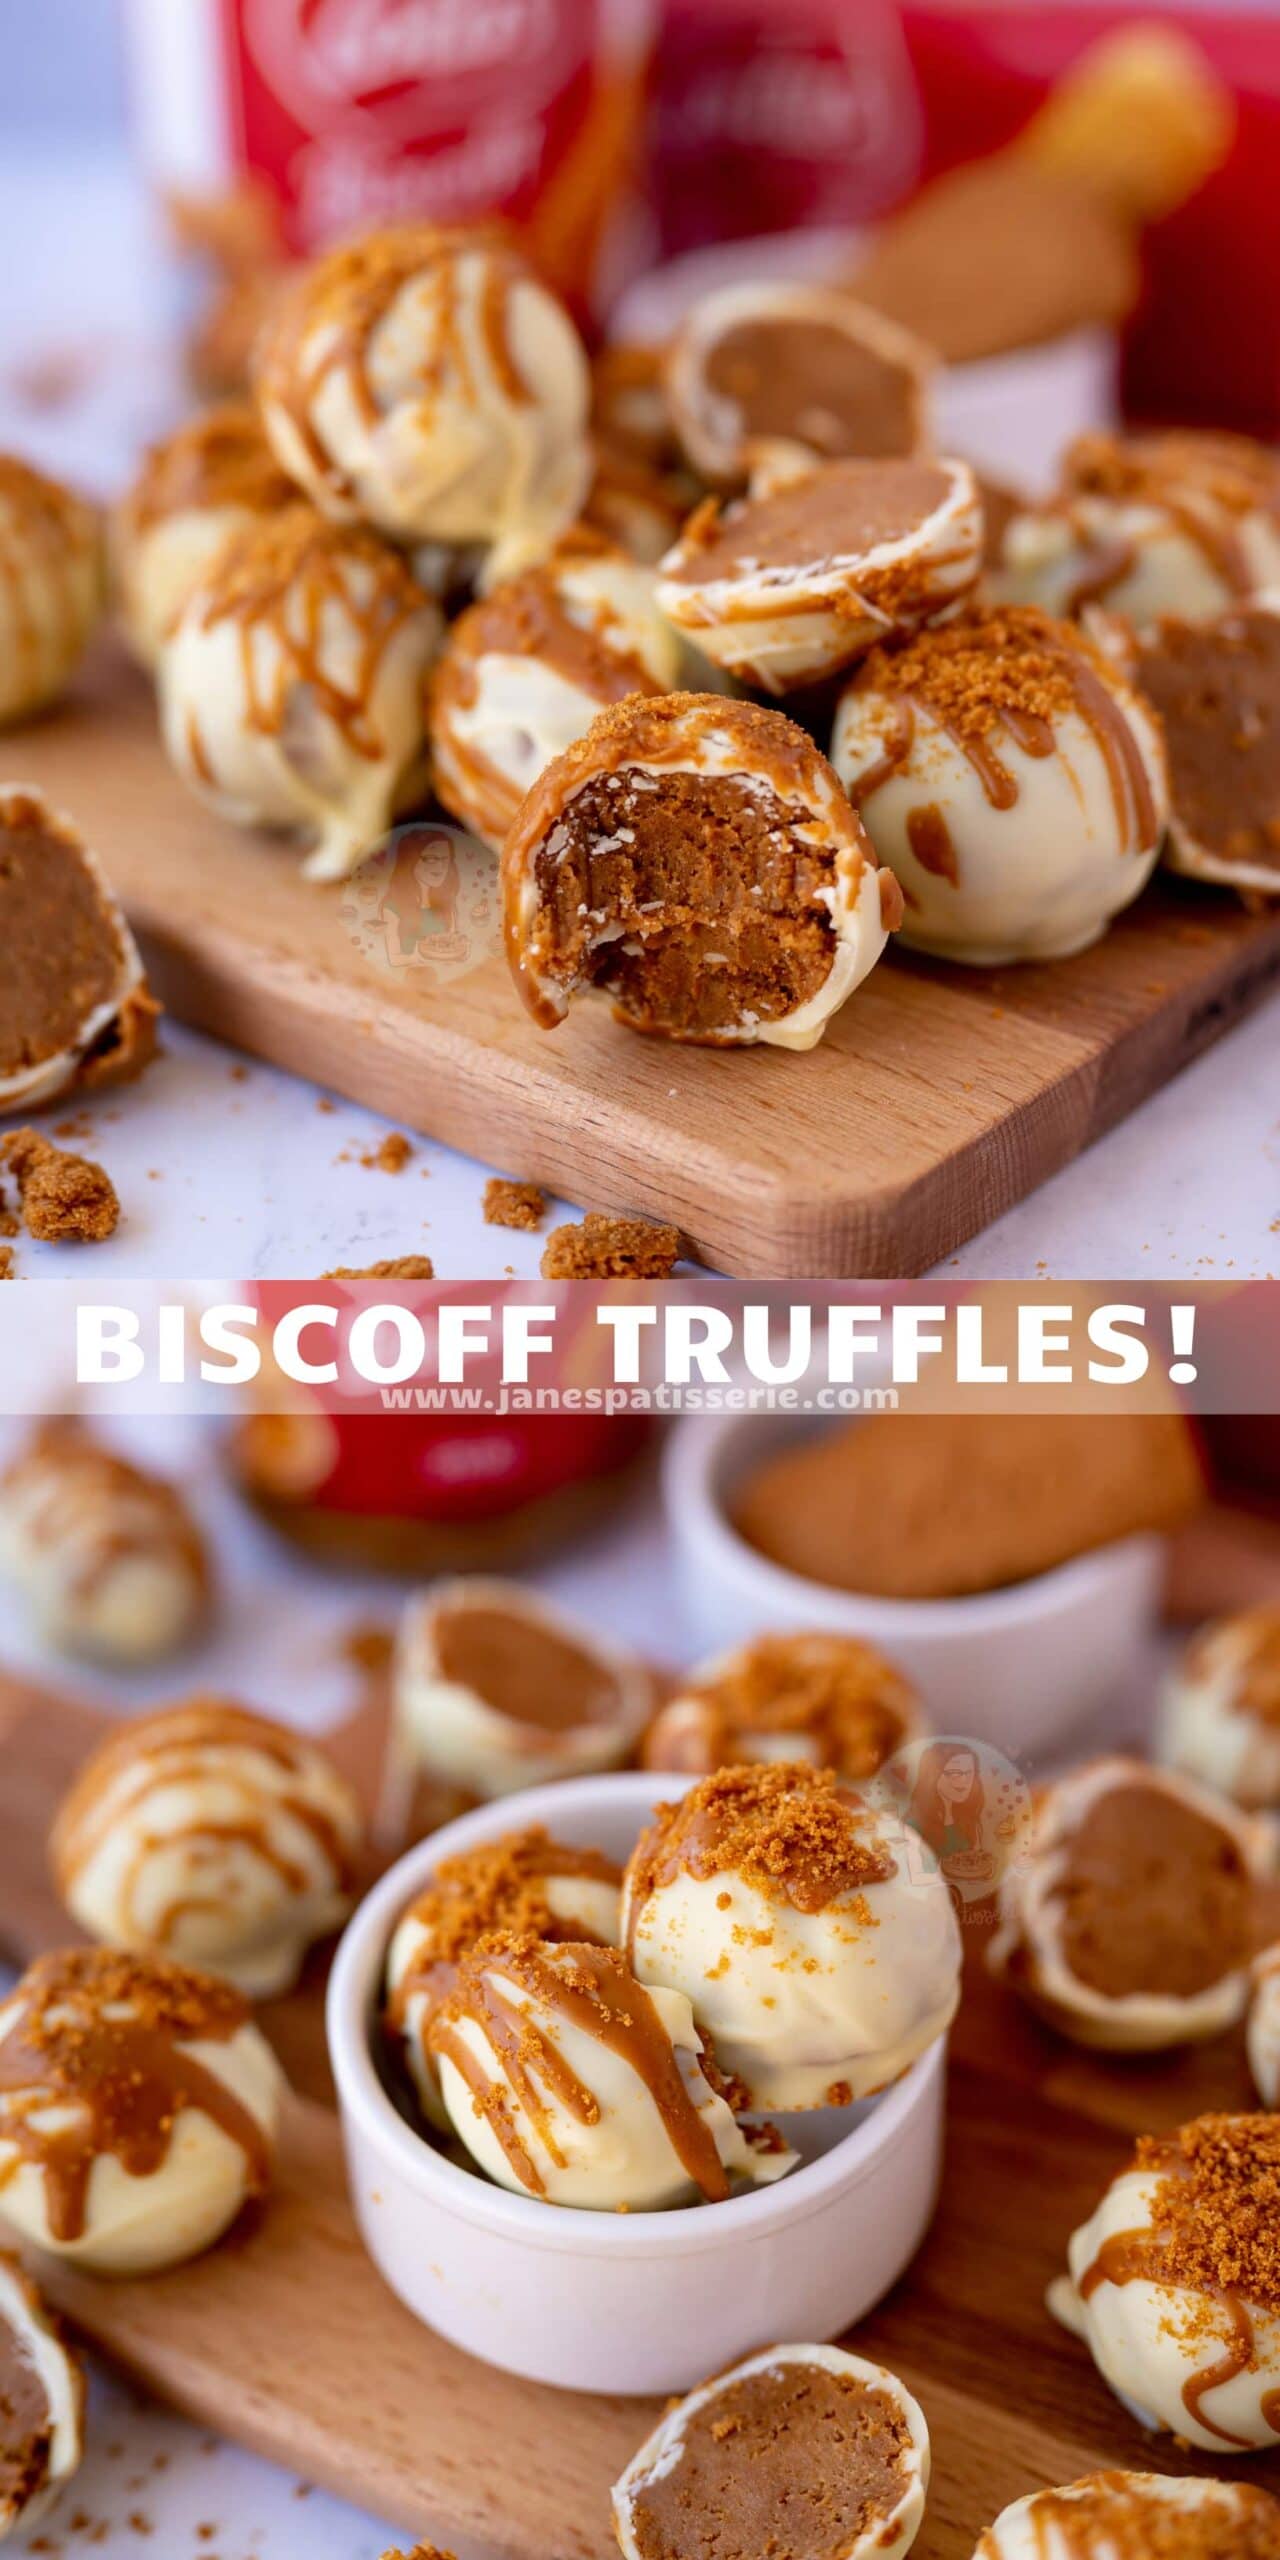 Biscoff Truffles! - Jane's Patisserie